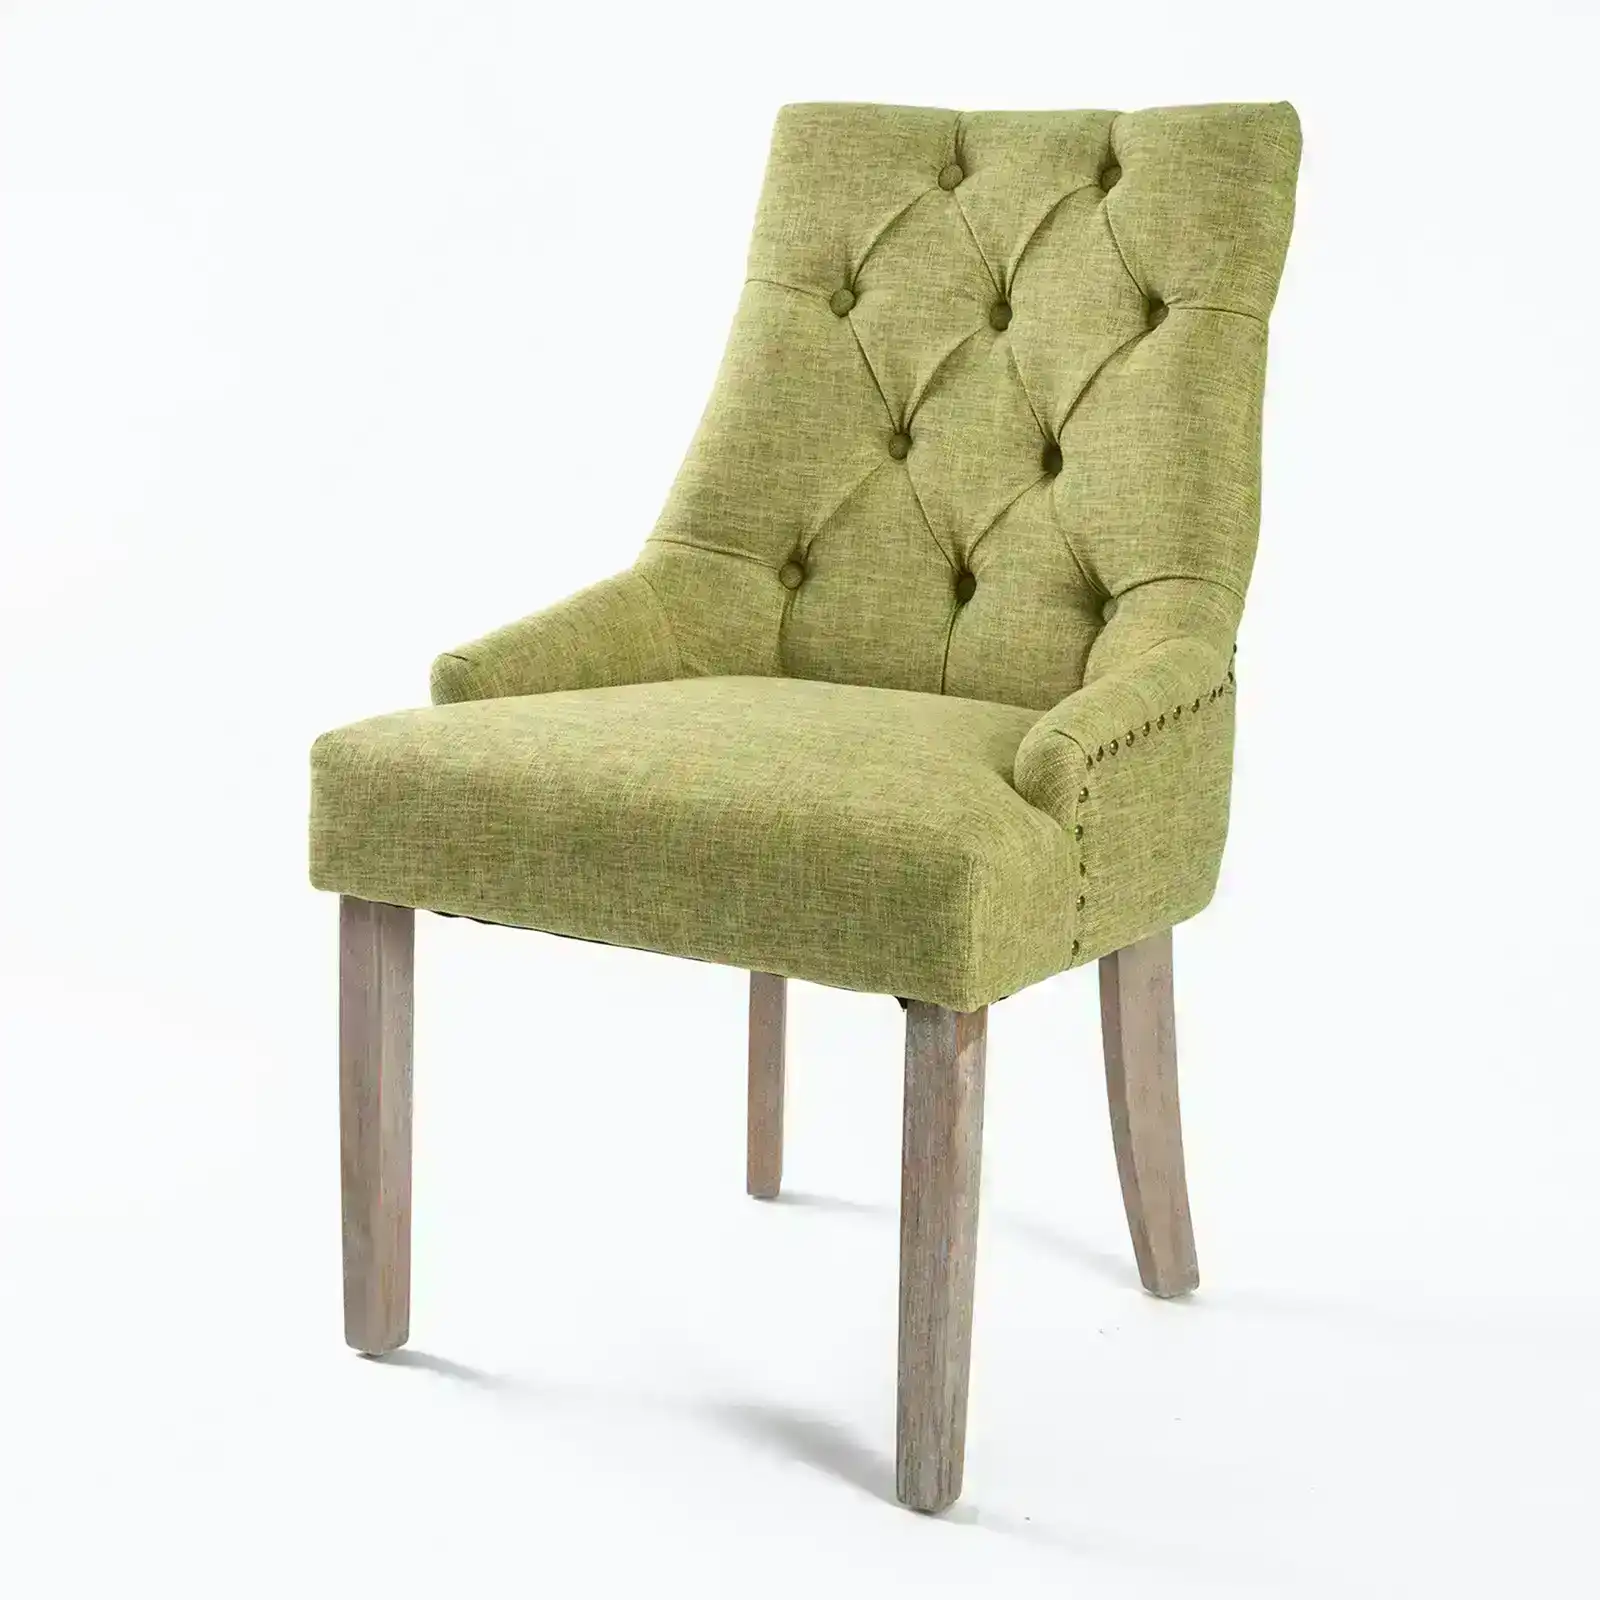 1X French Provincial Oak Leg Chair AMOUR - GREEN